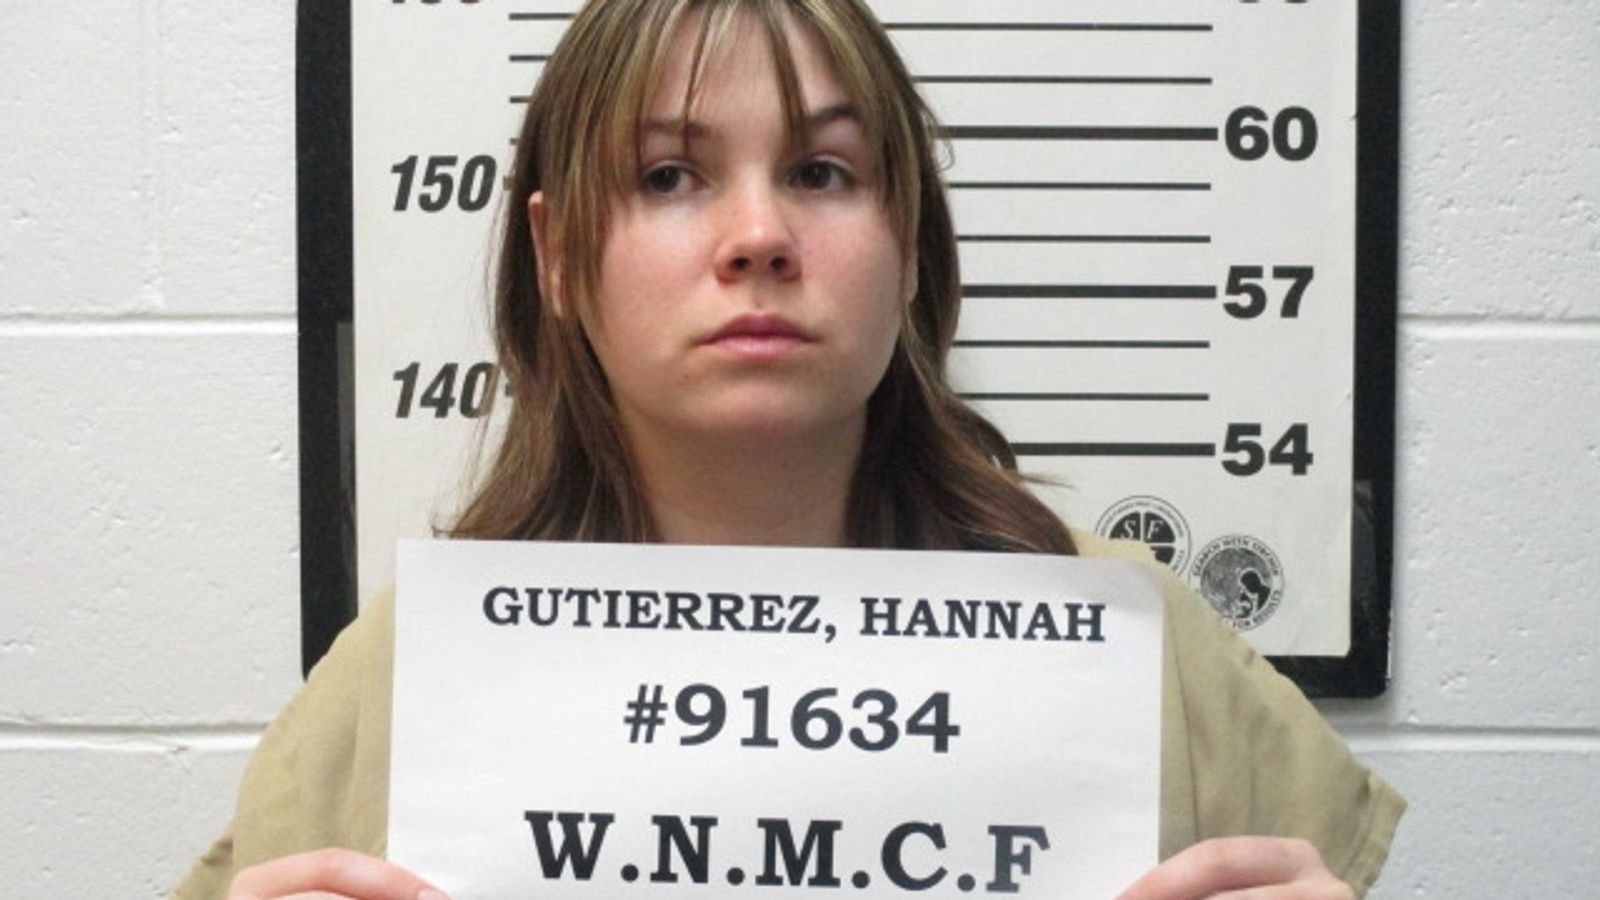 Rust weapons supervisor Hannah Gutierrez appeals against conviction over fatal shooting on Alec Baldwin film set